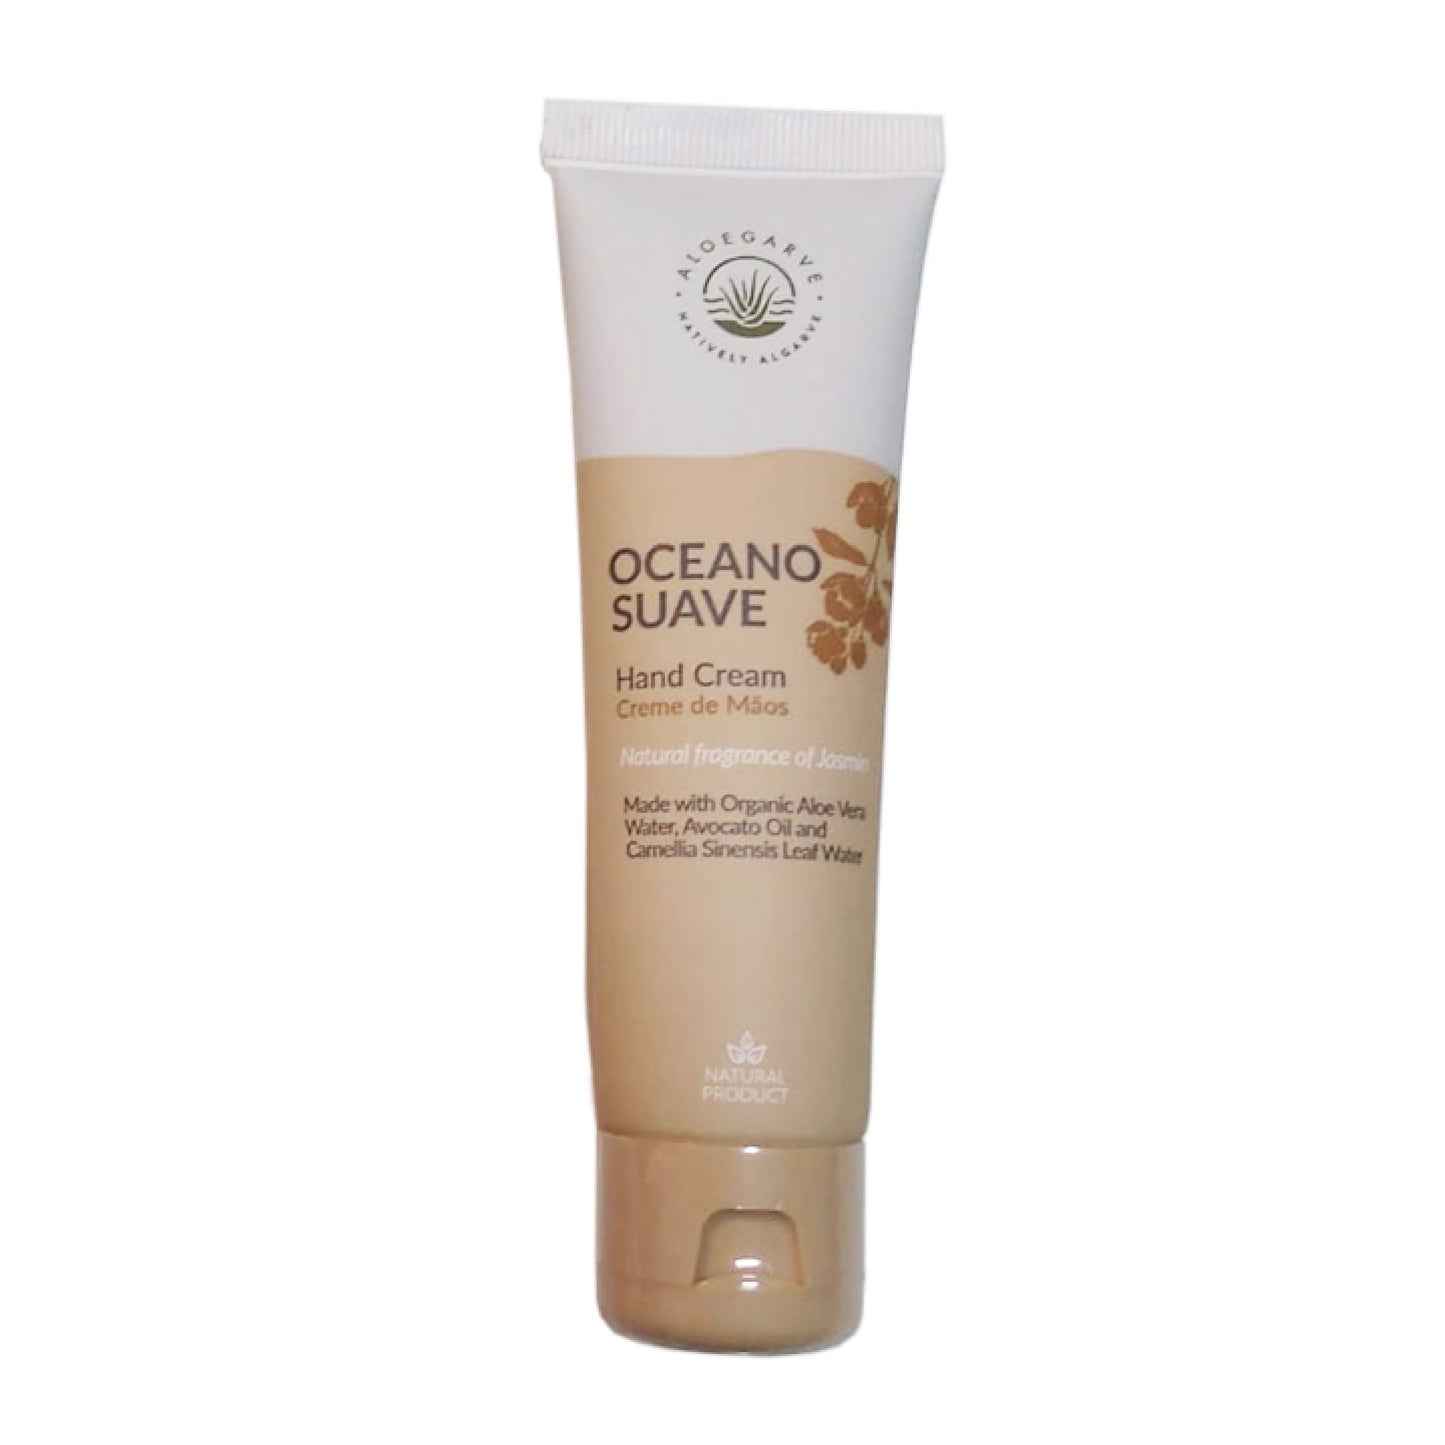 Deep Moisturizing Hand Cream "Oceano Suave" 50ml